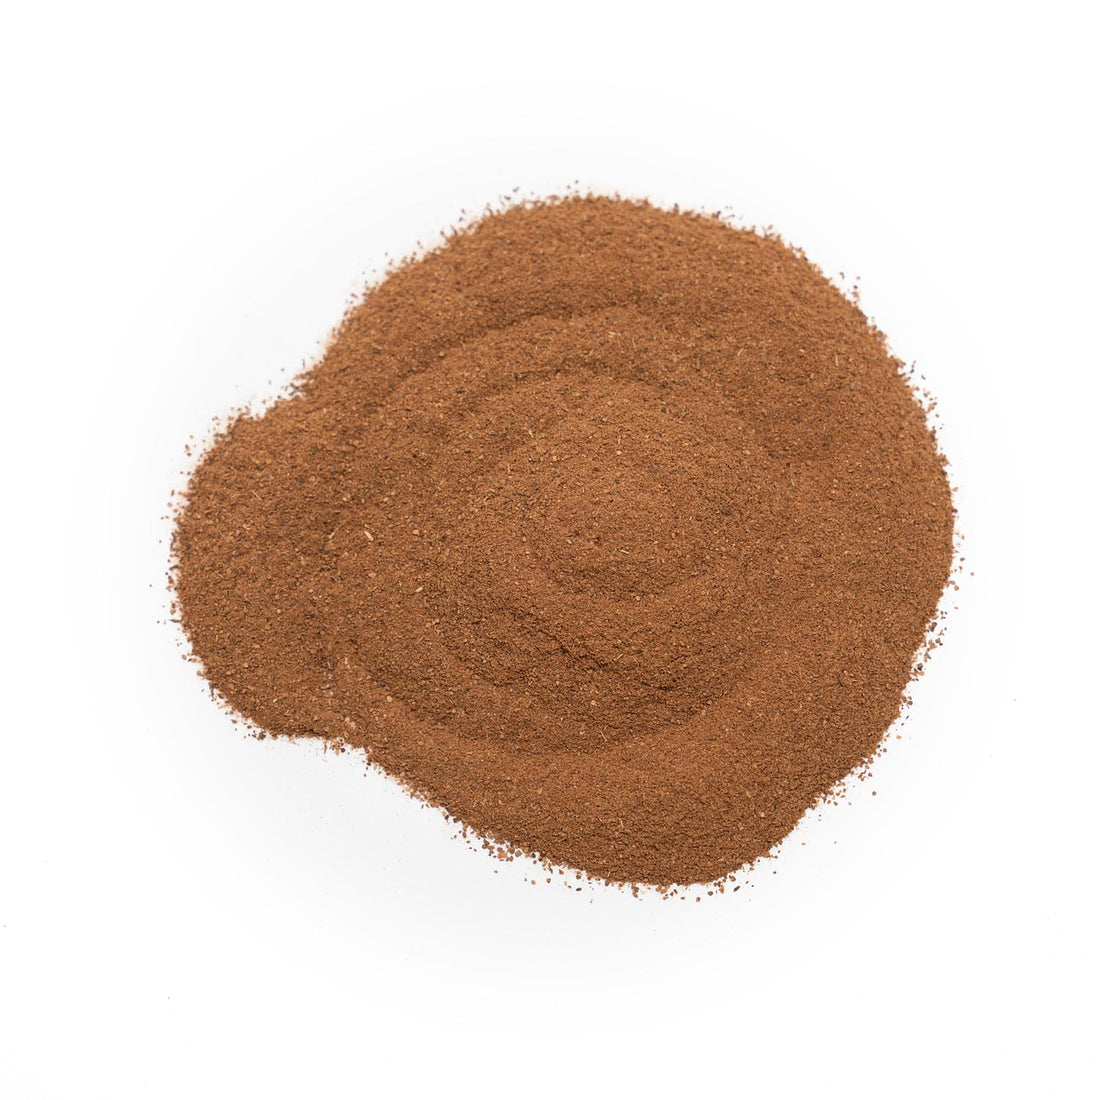 True Organic Ceylon Cinnamon 250g Pouch